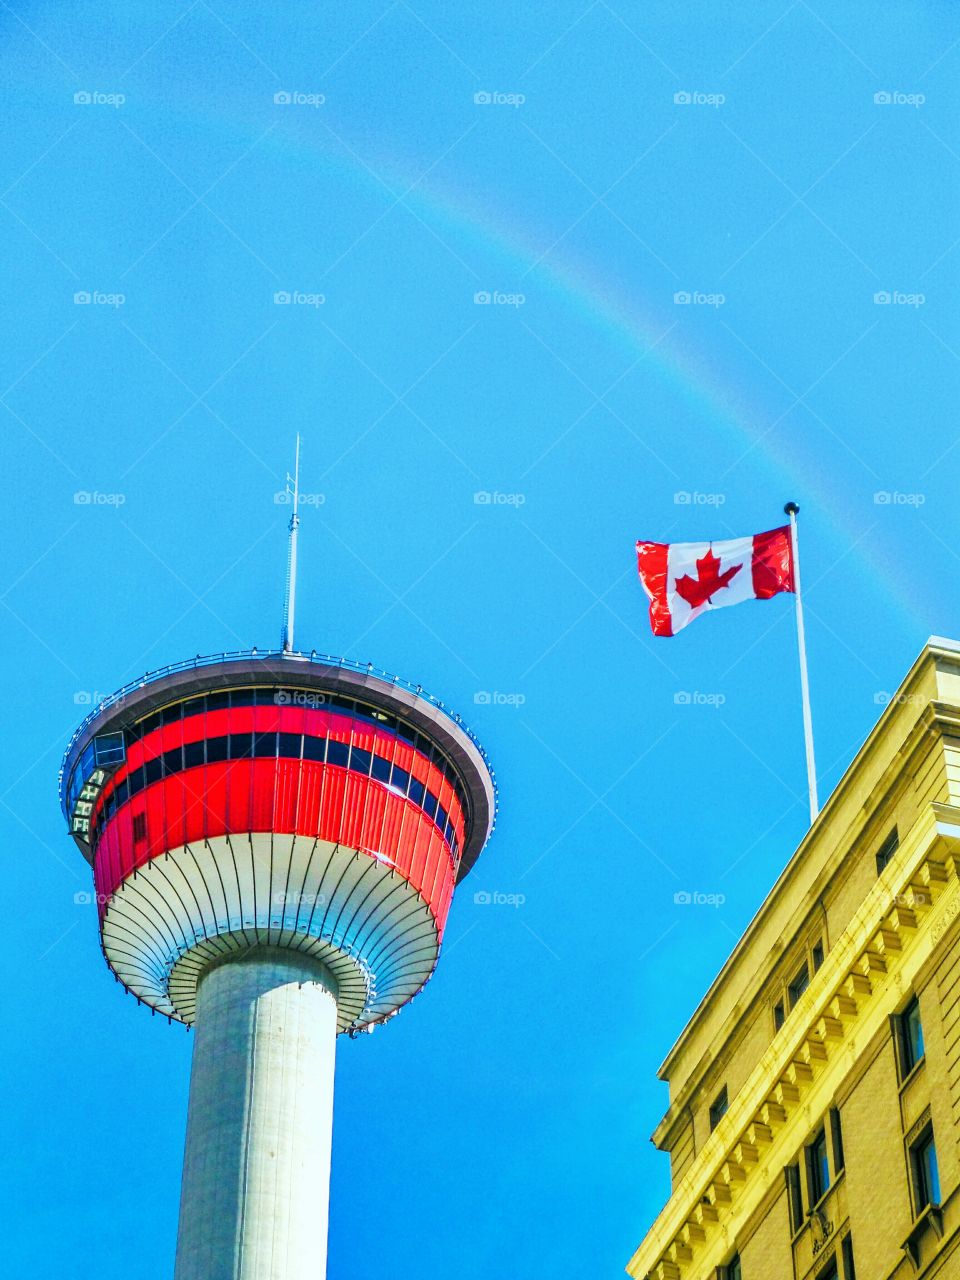 Rainbow above Calgary tower. Last days of summer, a rainbow appeared above the Calgary tower and the flag unfurled